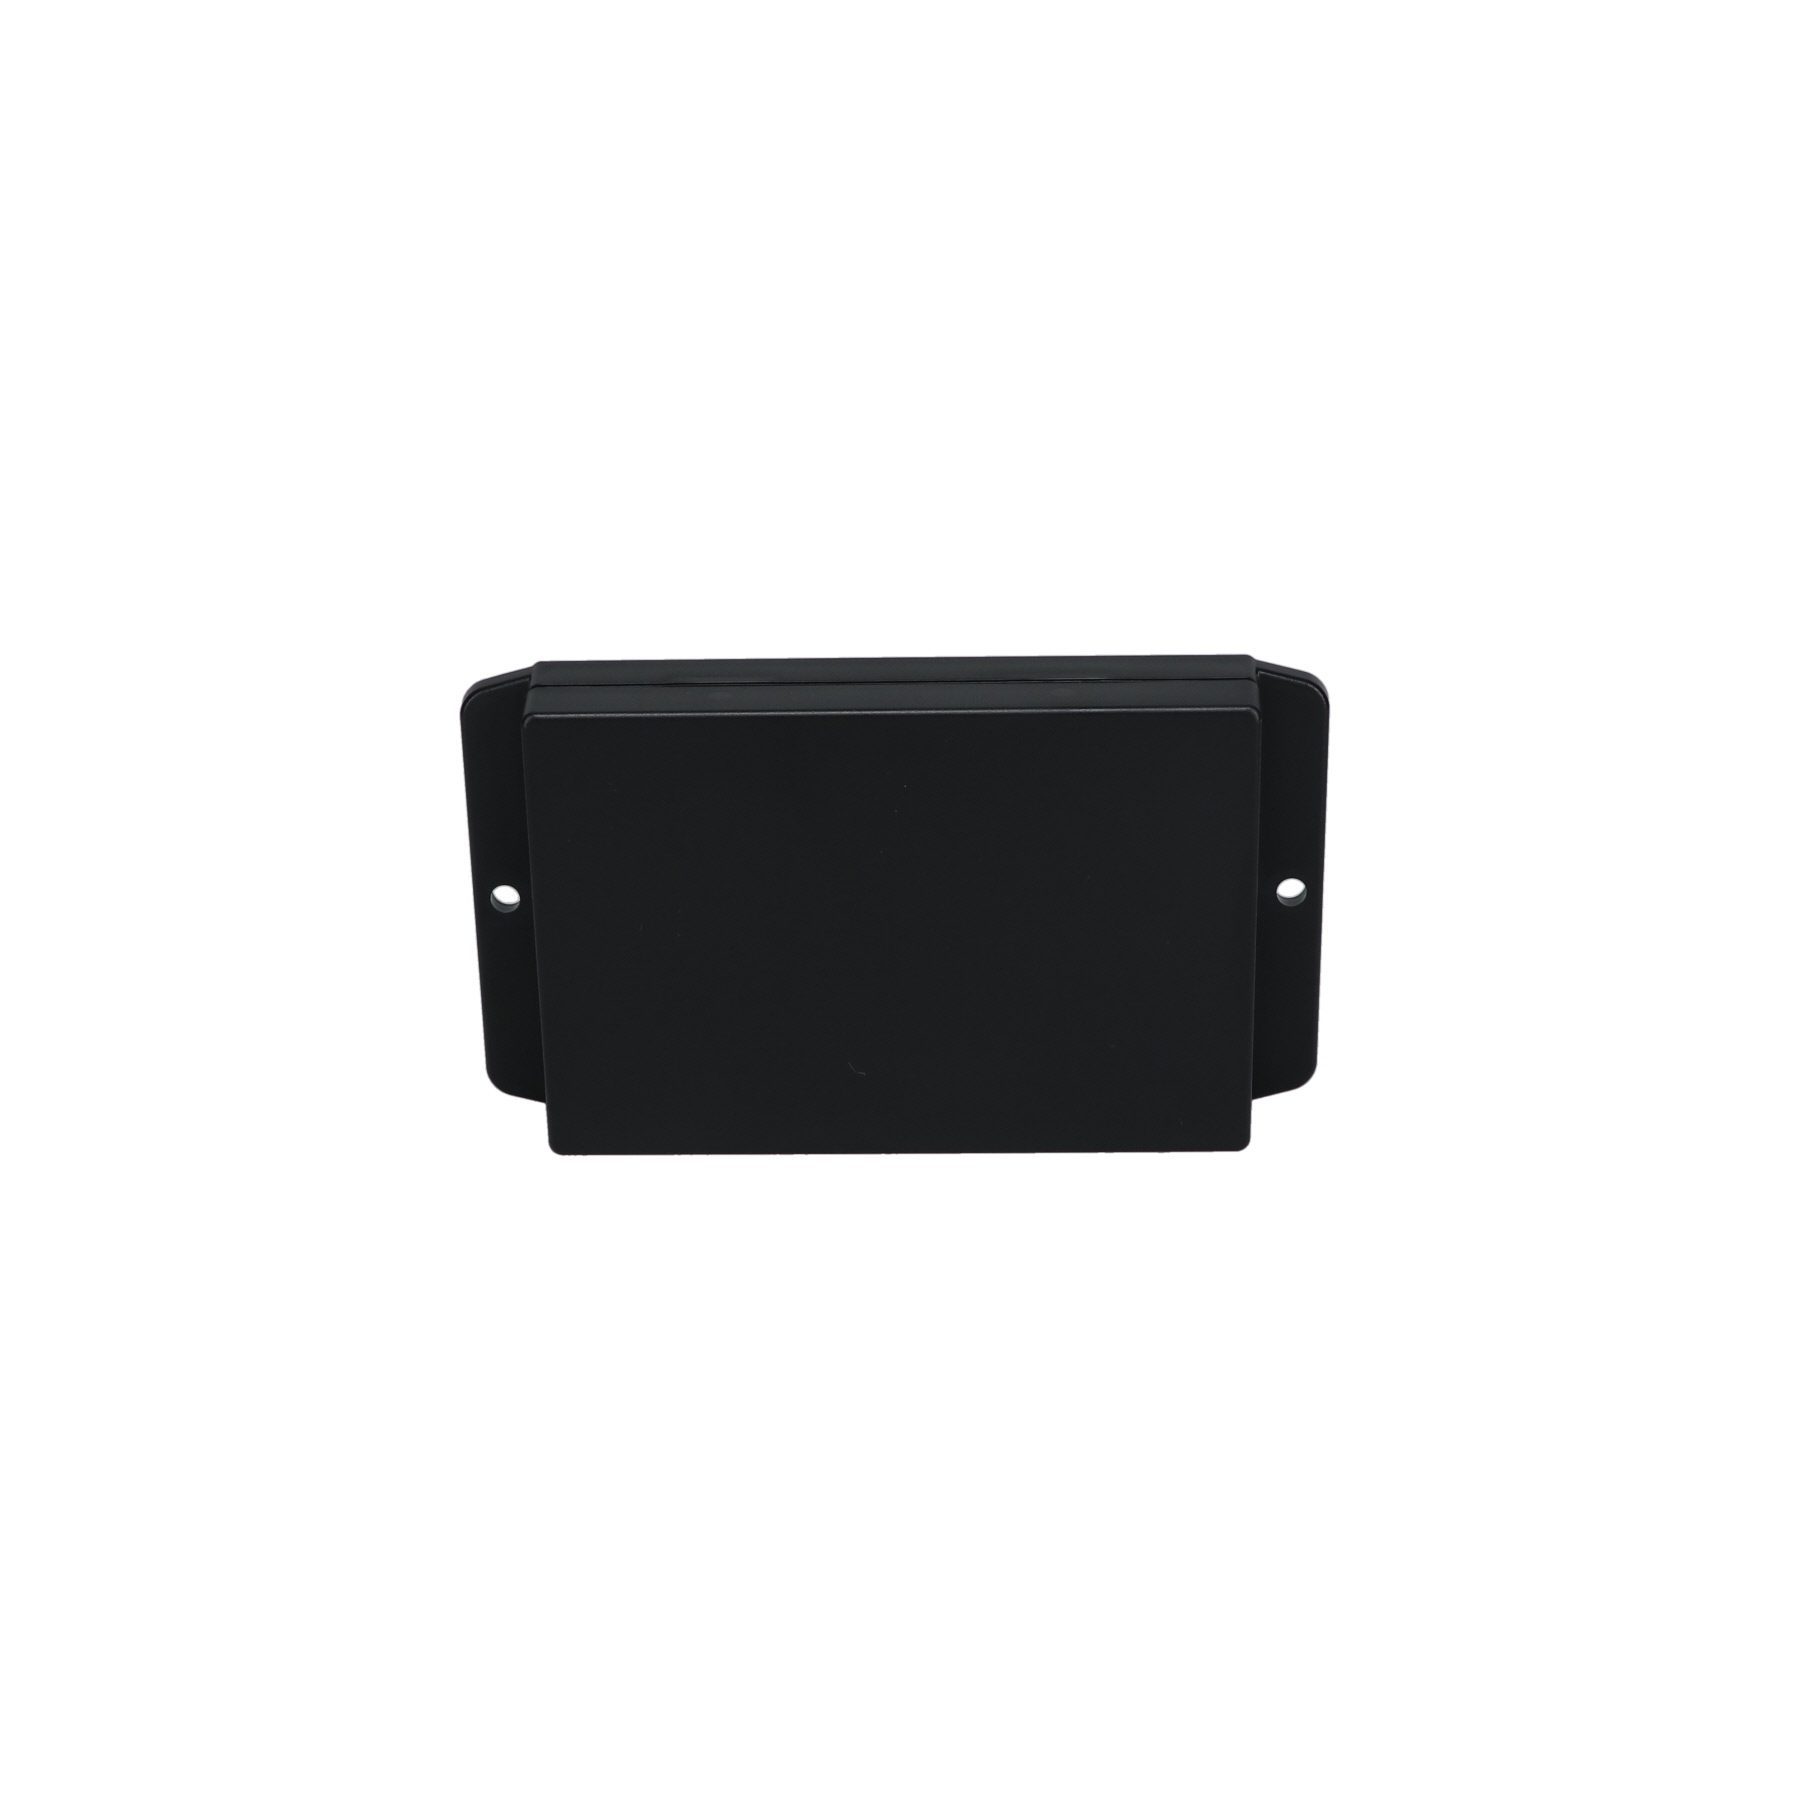 Snap Utility Box Black CU-18427-B